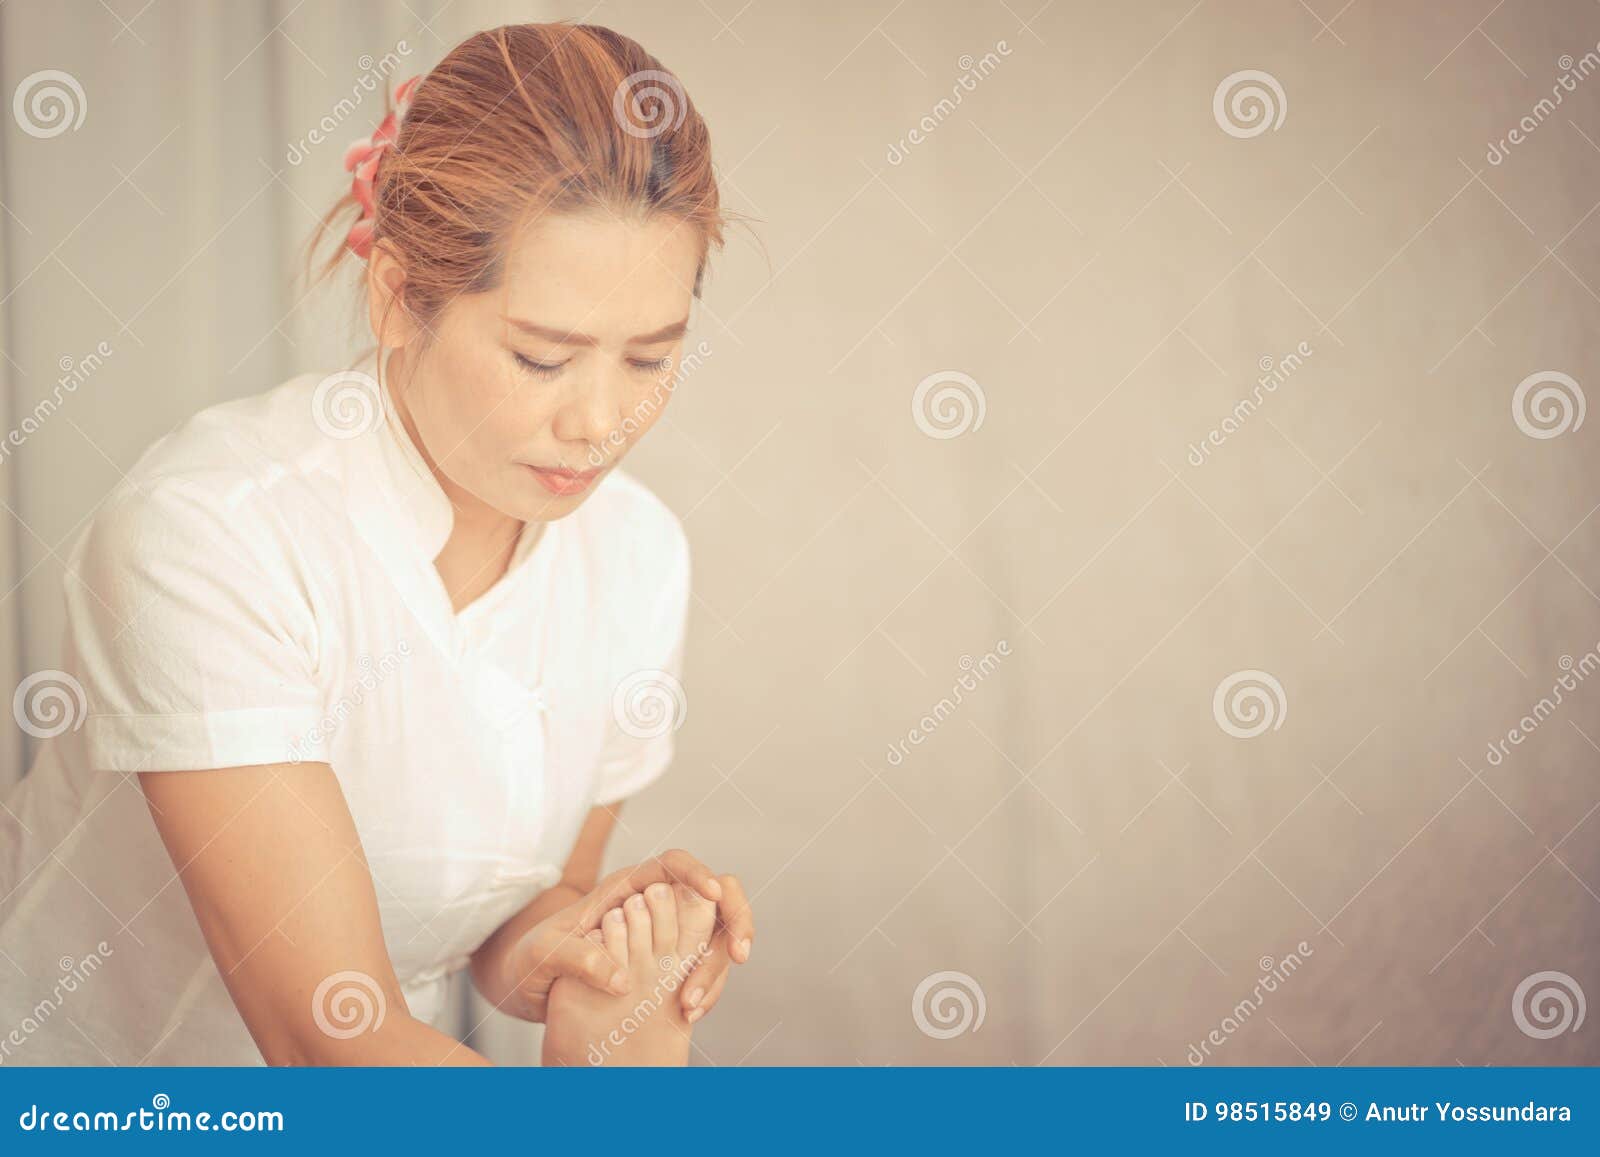 Thai Massage Therapist Massaging Feet Stock Image Image Of Copy Skin 98515849